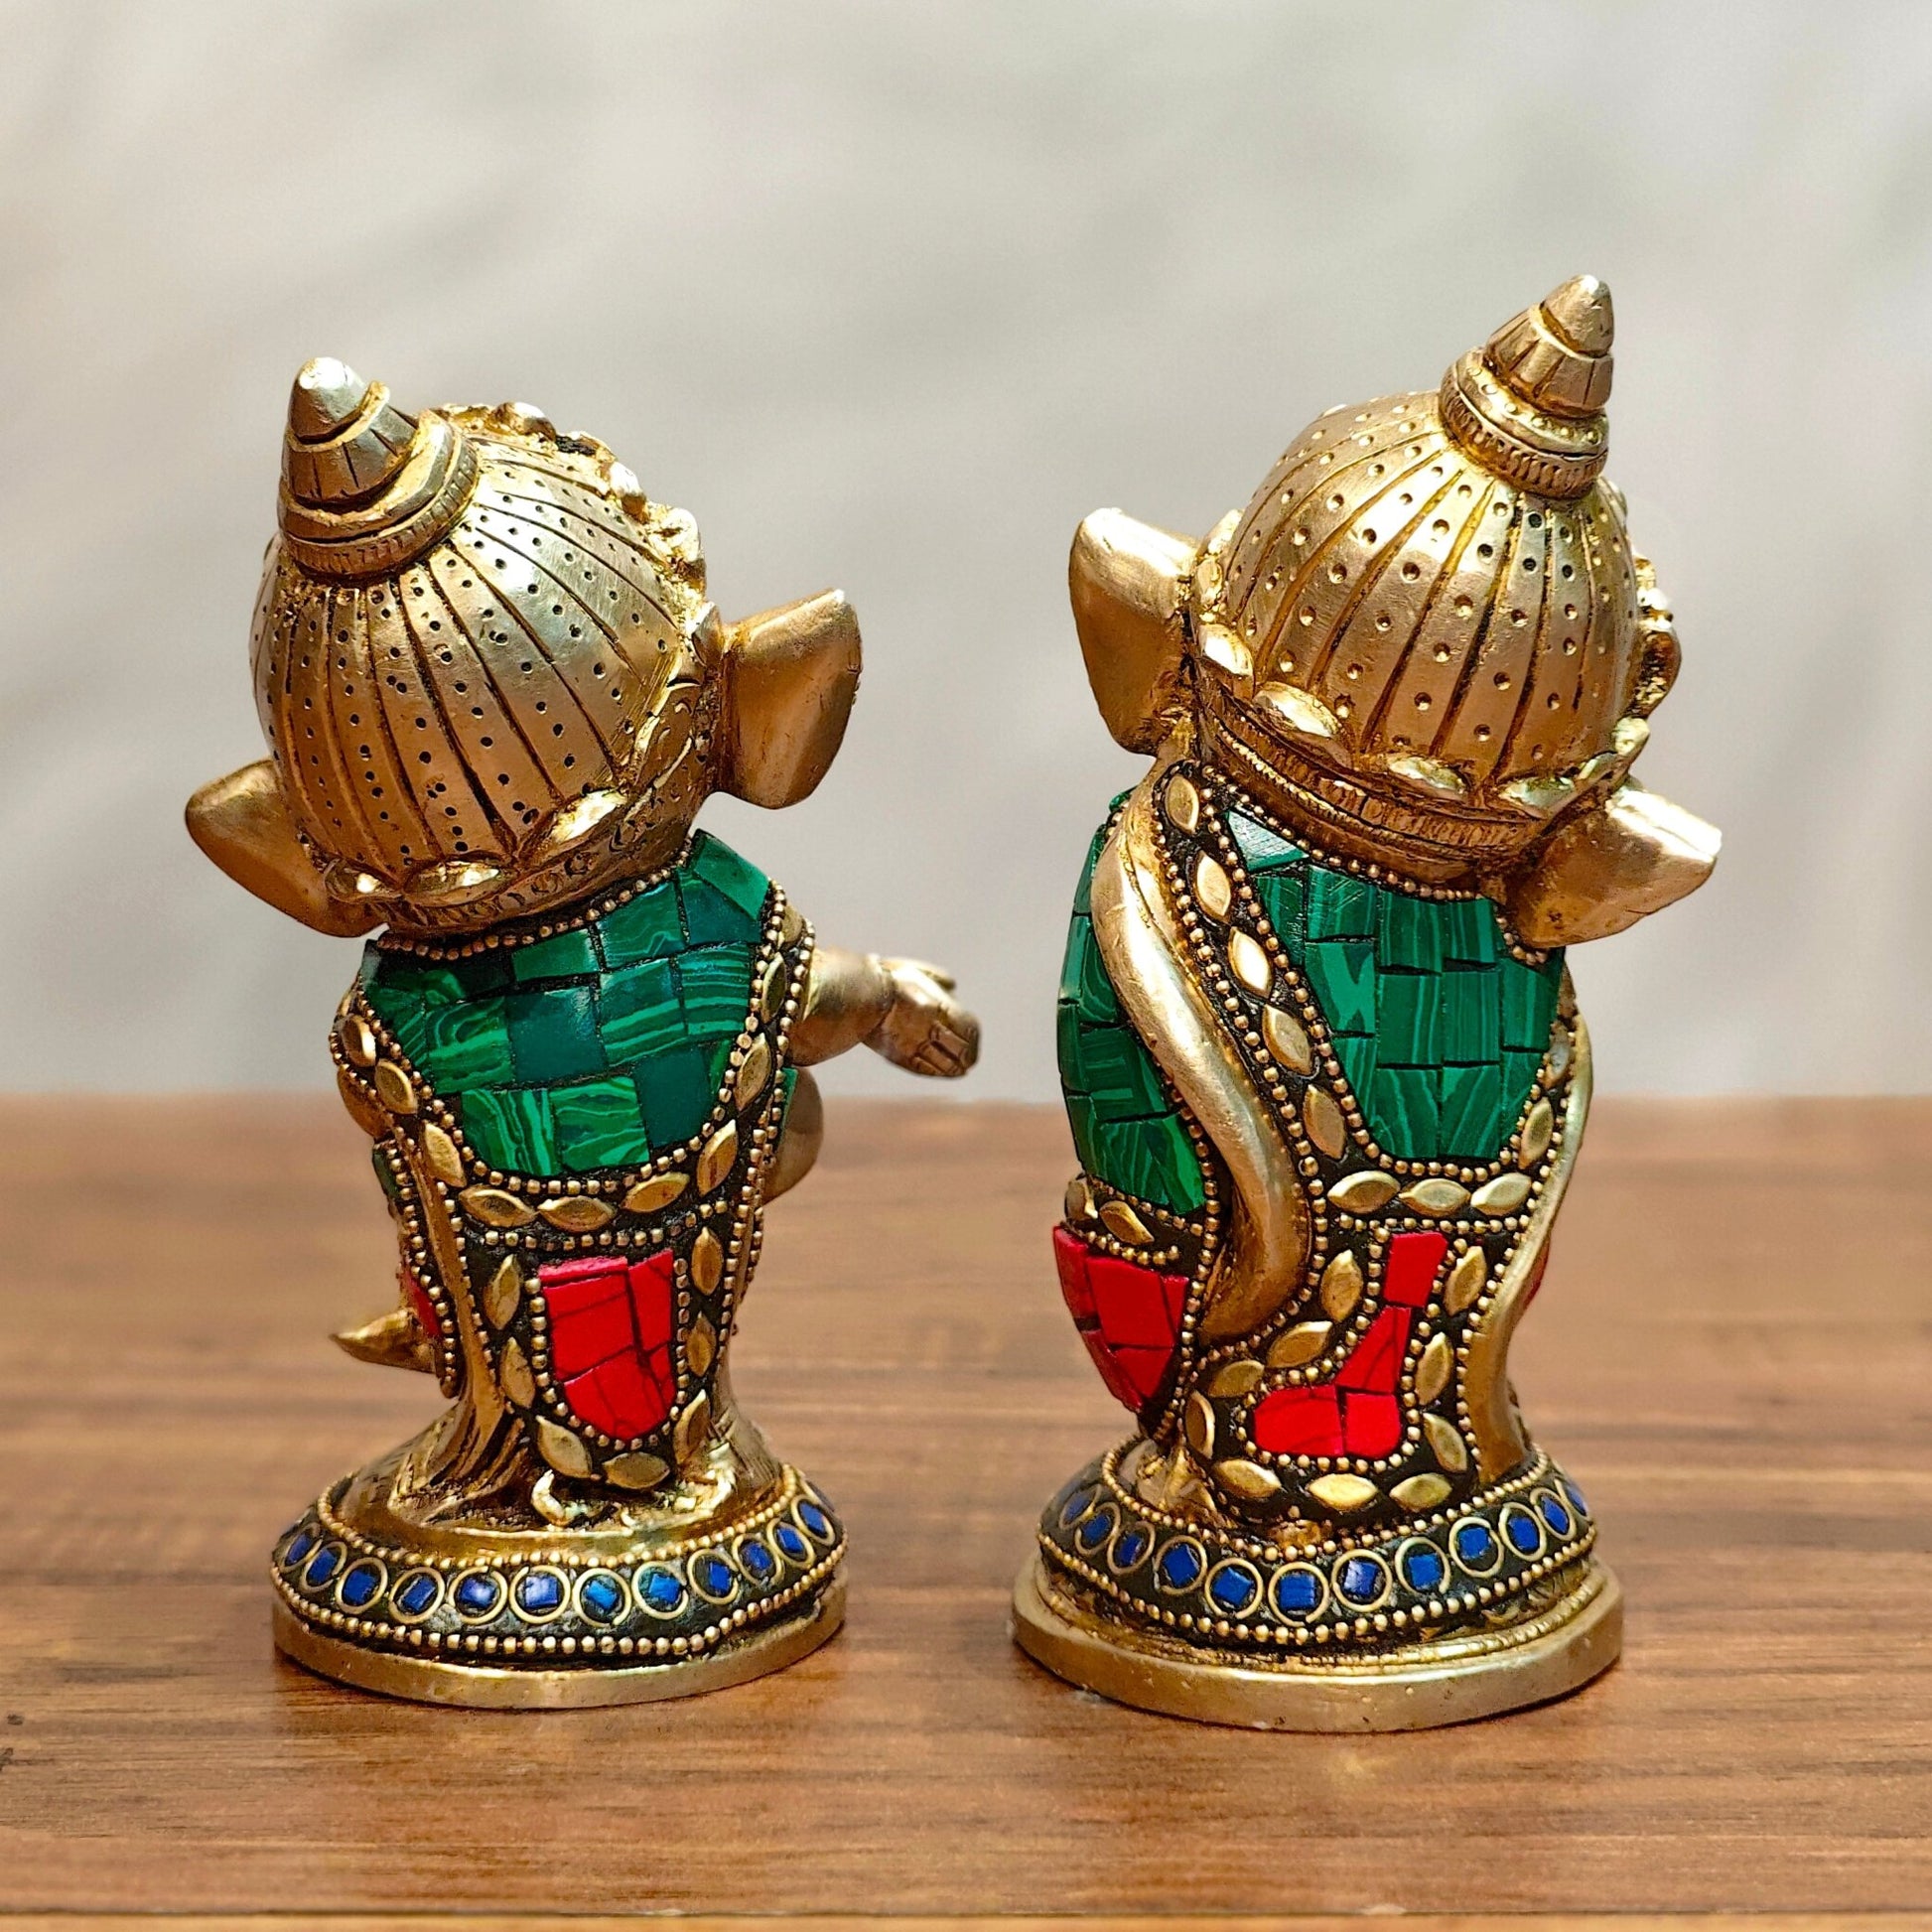 Baby Ganesha Brass Idols pair 5 " Stonework - Budhshiv.com